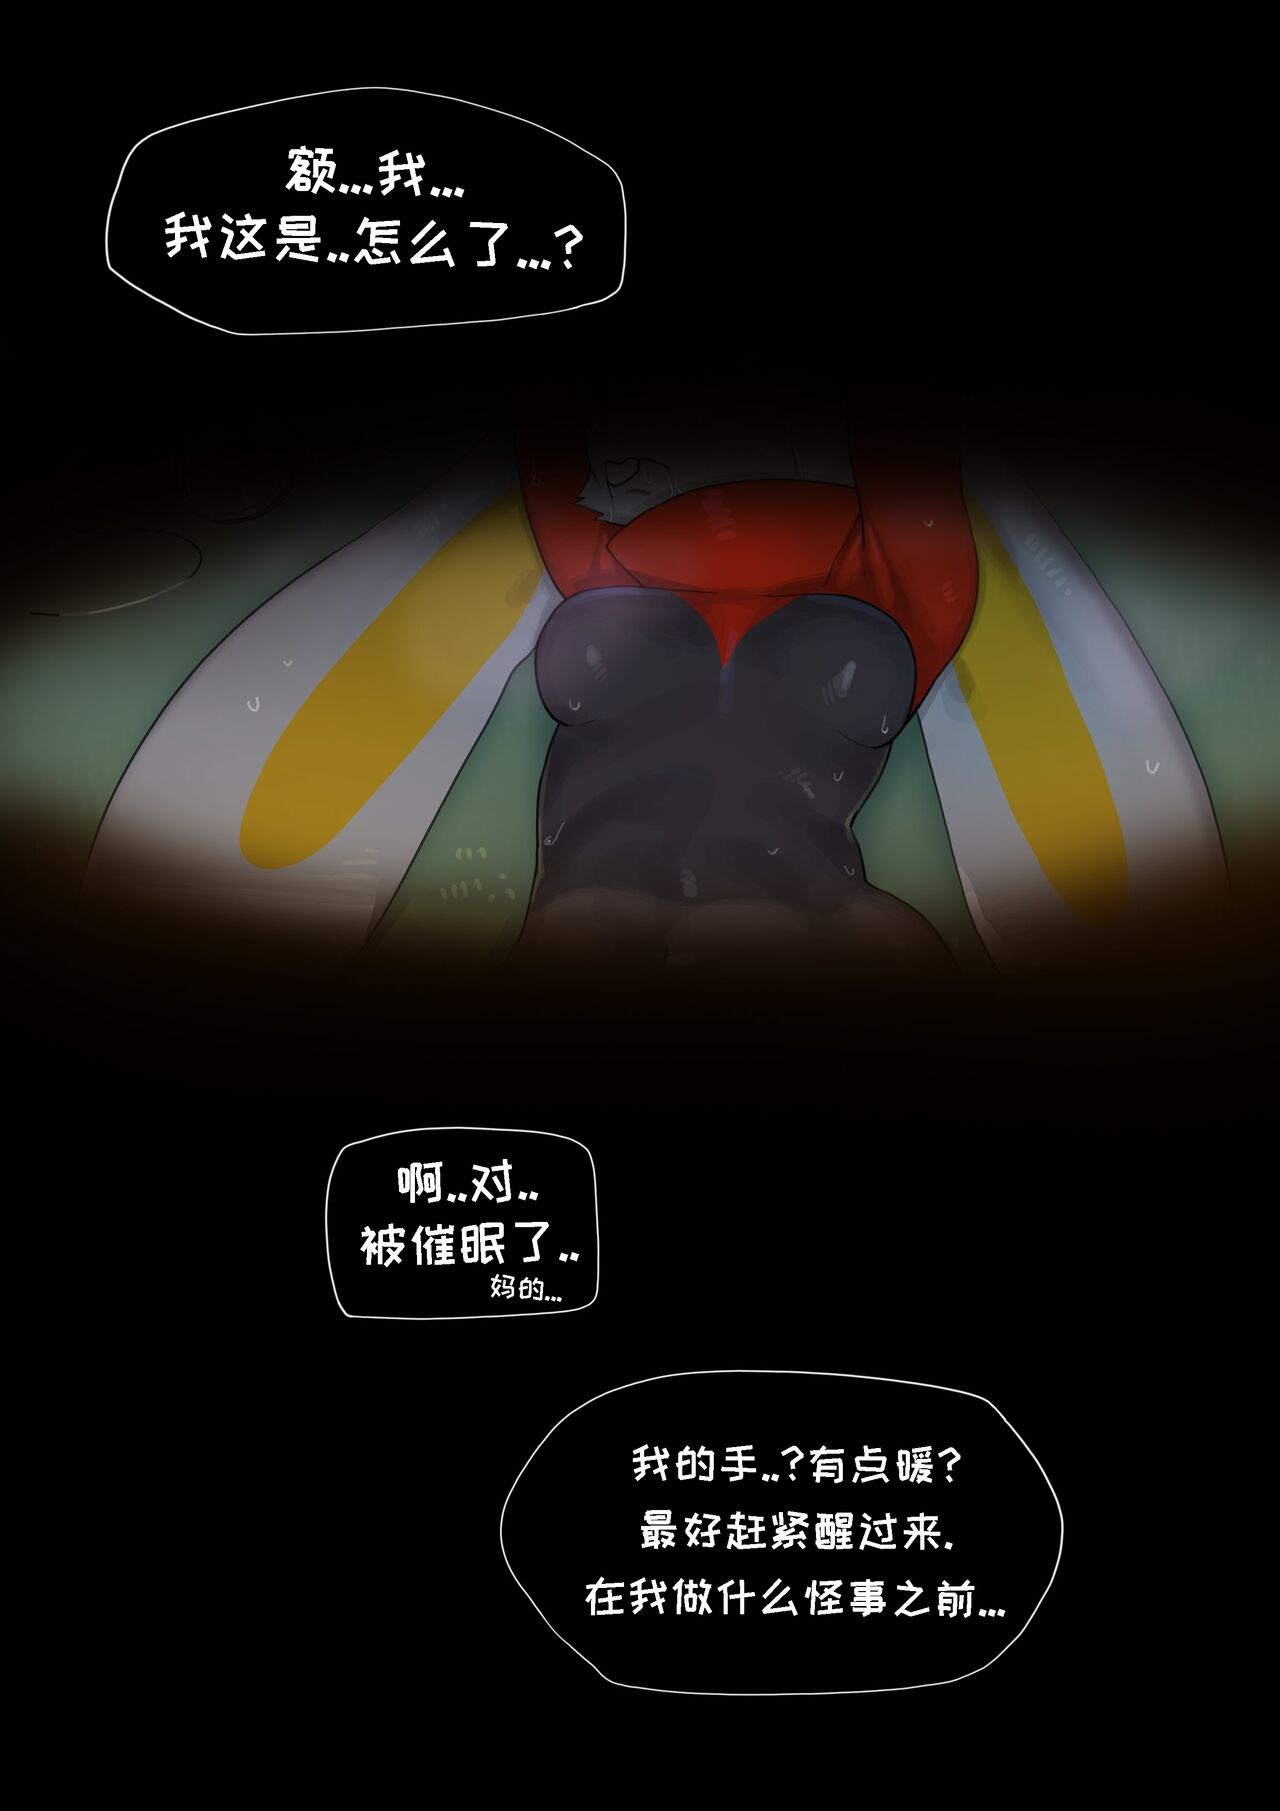 [Gudl] Rebel Raboot (Pokemon)《来自她的爱》 [Chinese] (Ongoing) 